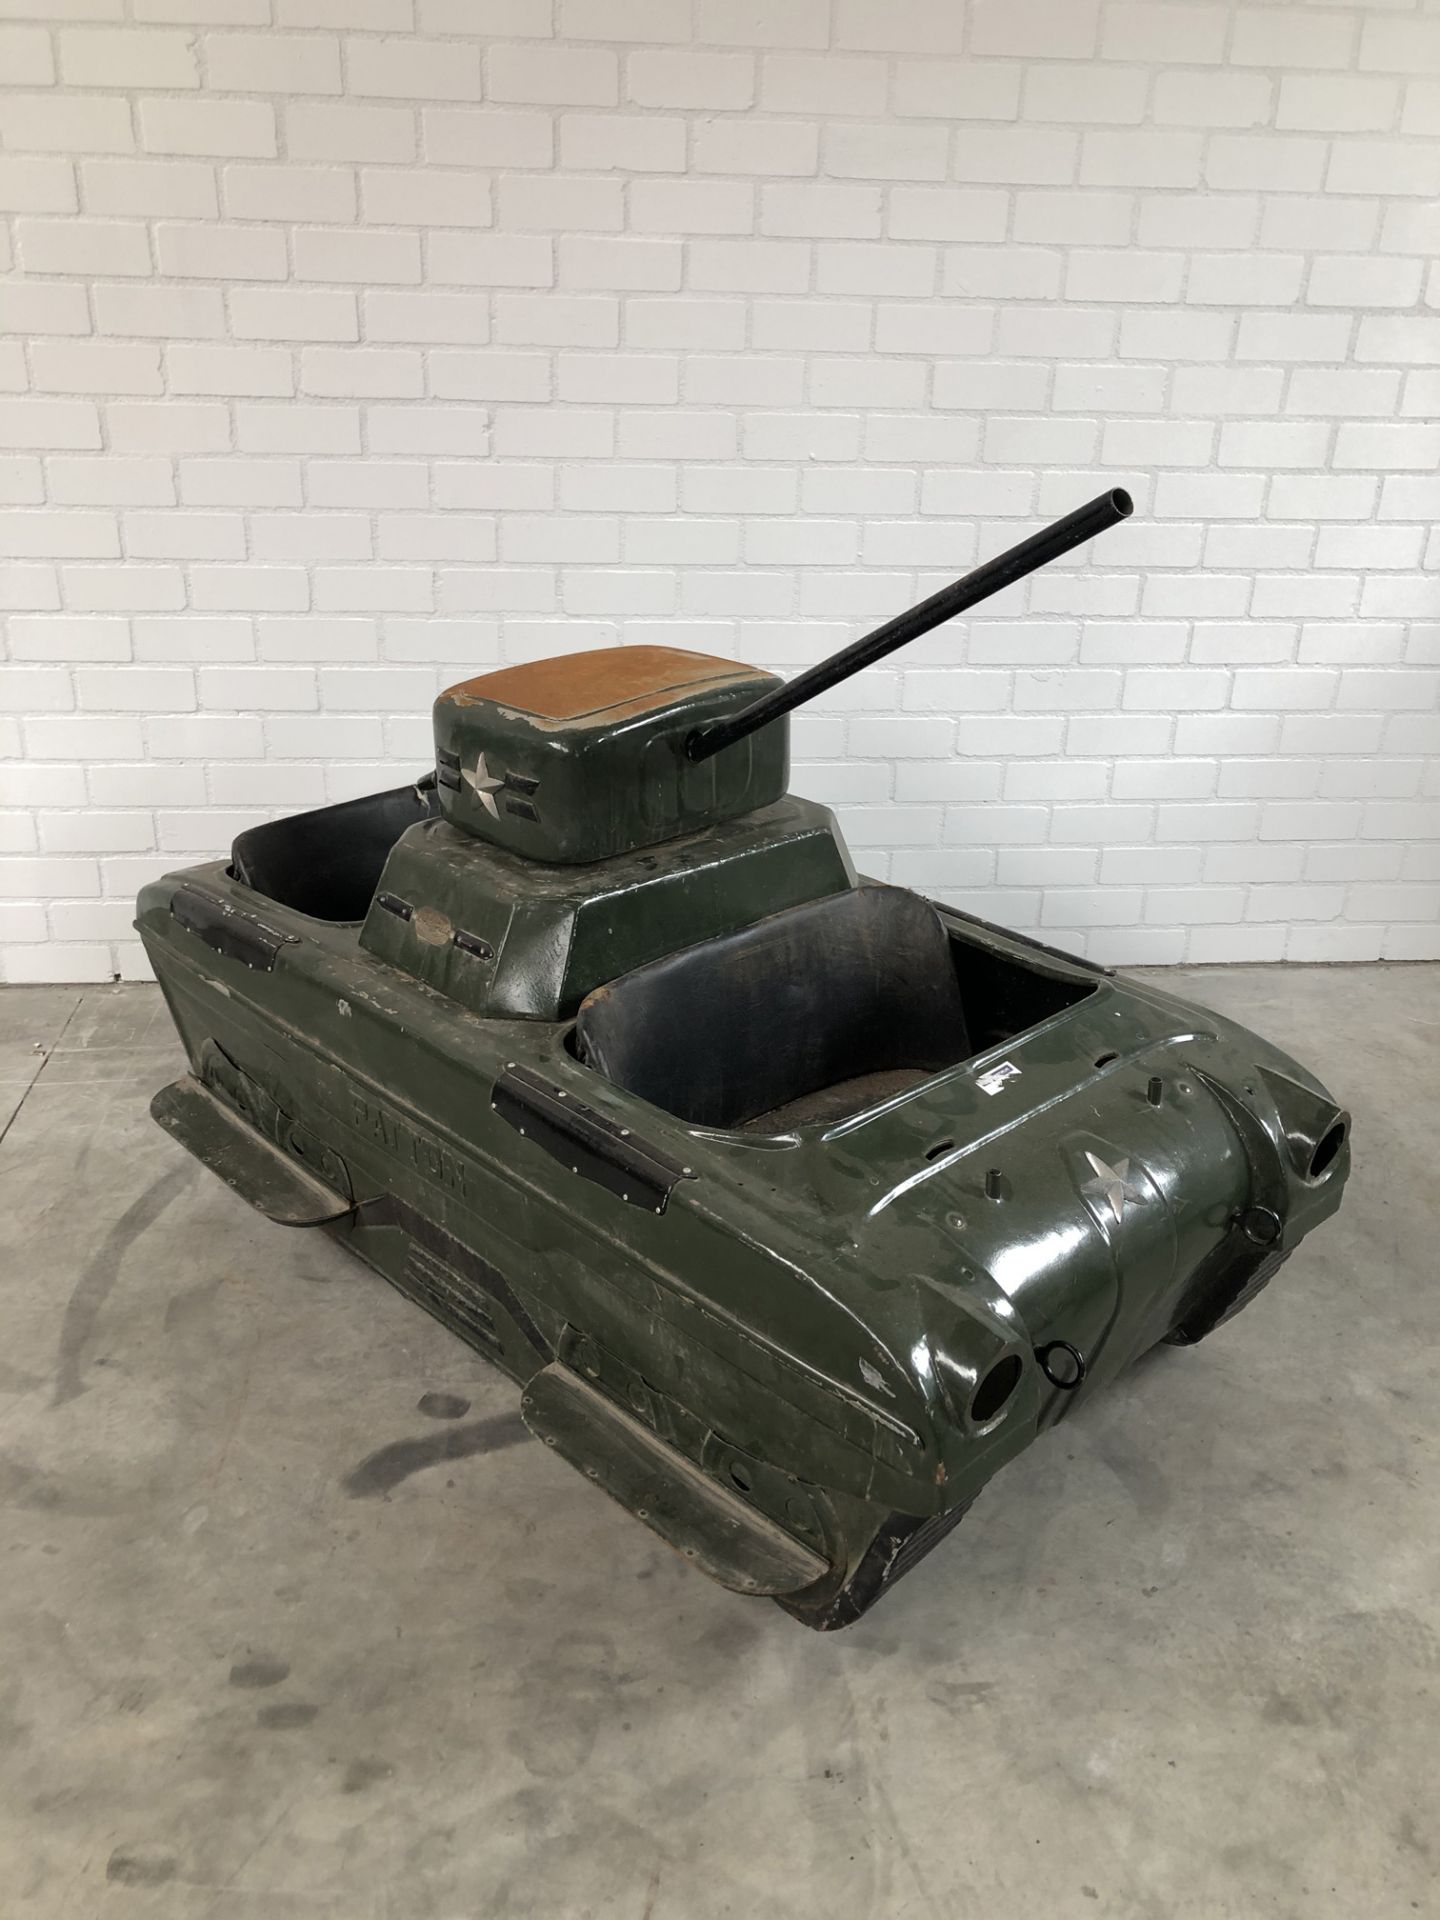 Unrestored L'Autopede Carousel Tank - Image 10 of 16